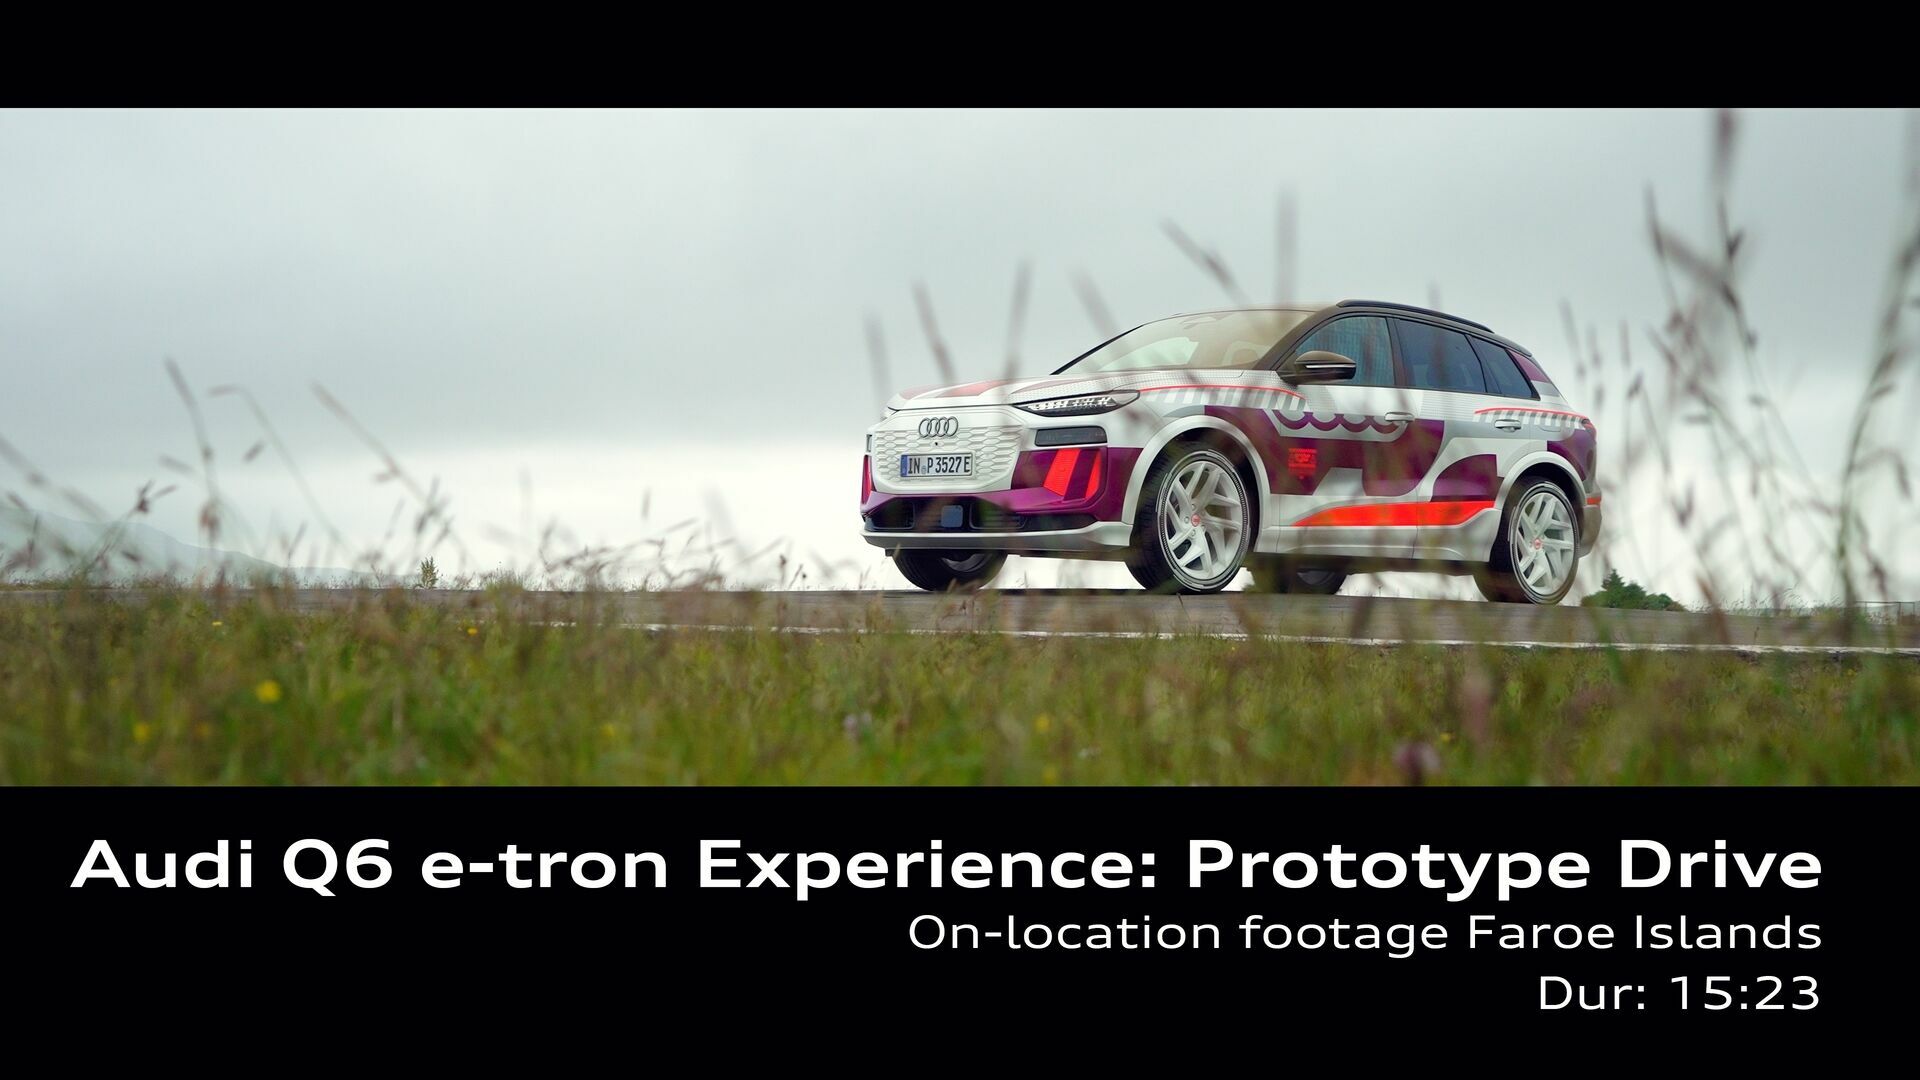 Footage: Audi Q6 e-tron Experience – Prototype Drive